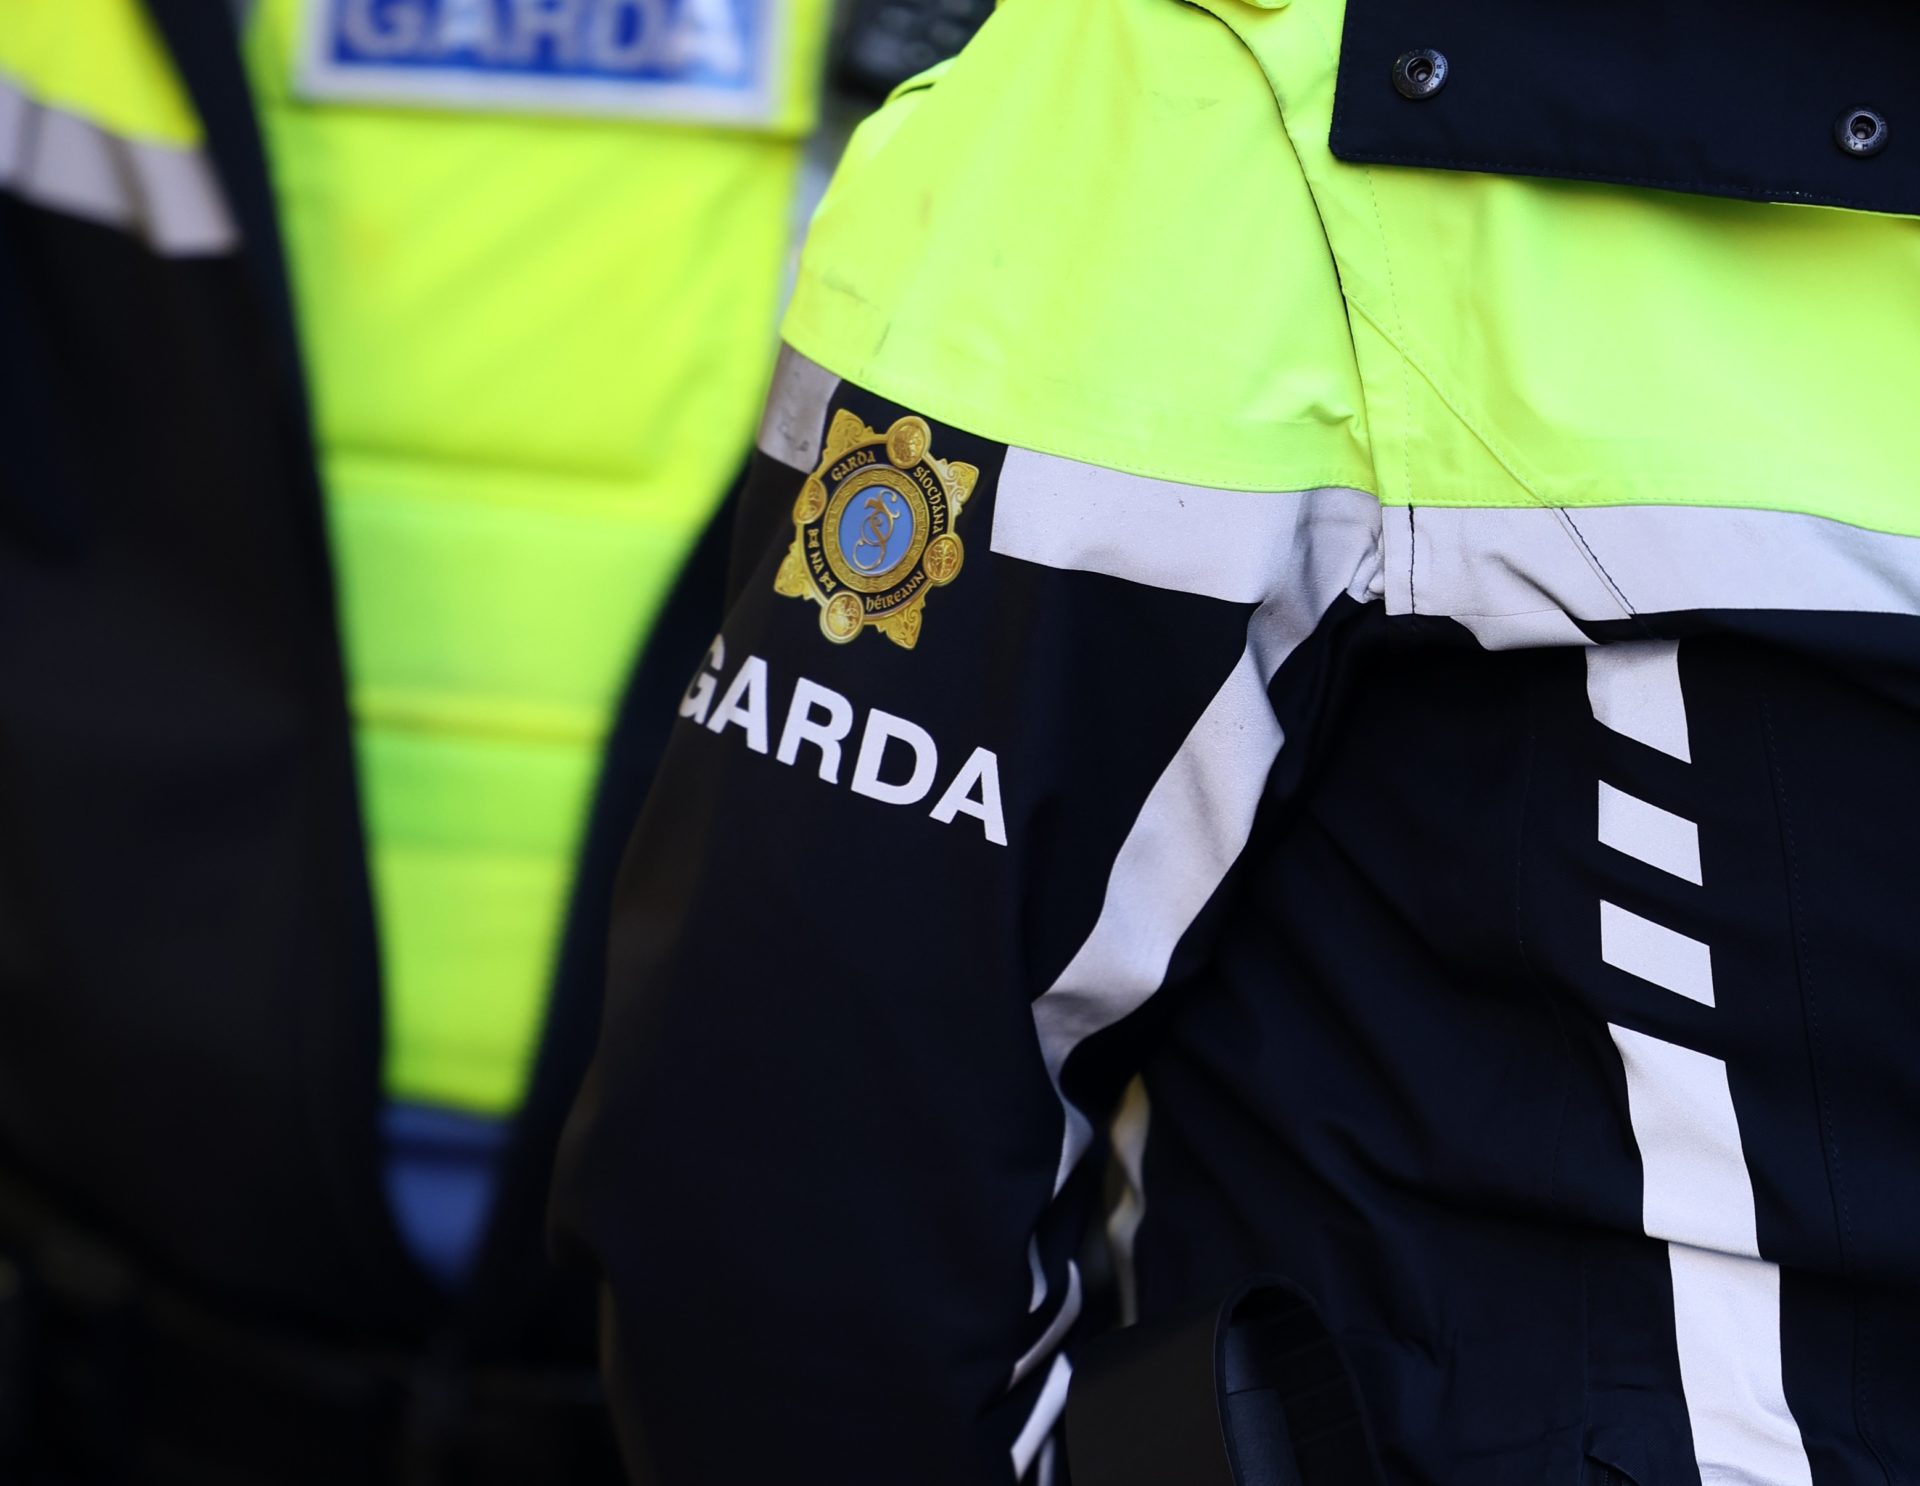 Members of Gardaí on patrol in Dublin city centre, 16-12-23.